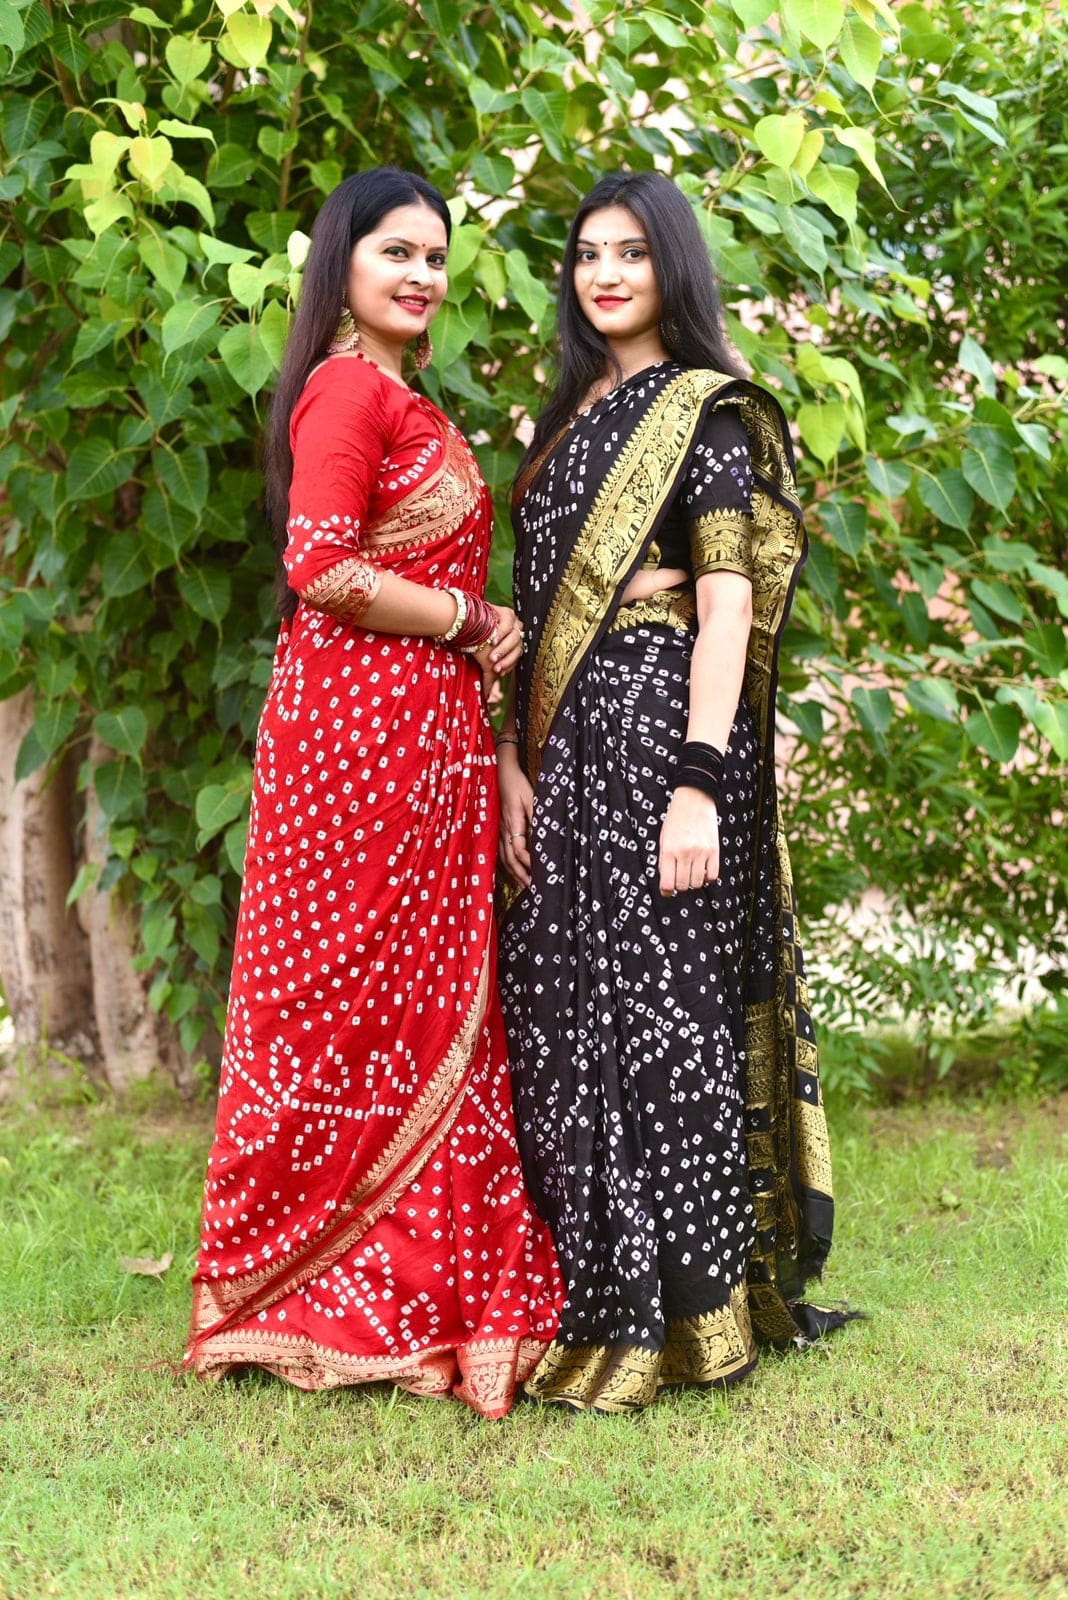 Poise Passion: How to Wear Sonam Kapoor Double Pallu Saree - 4 Double Drape  Styles